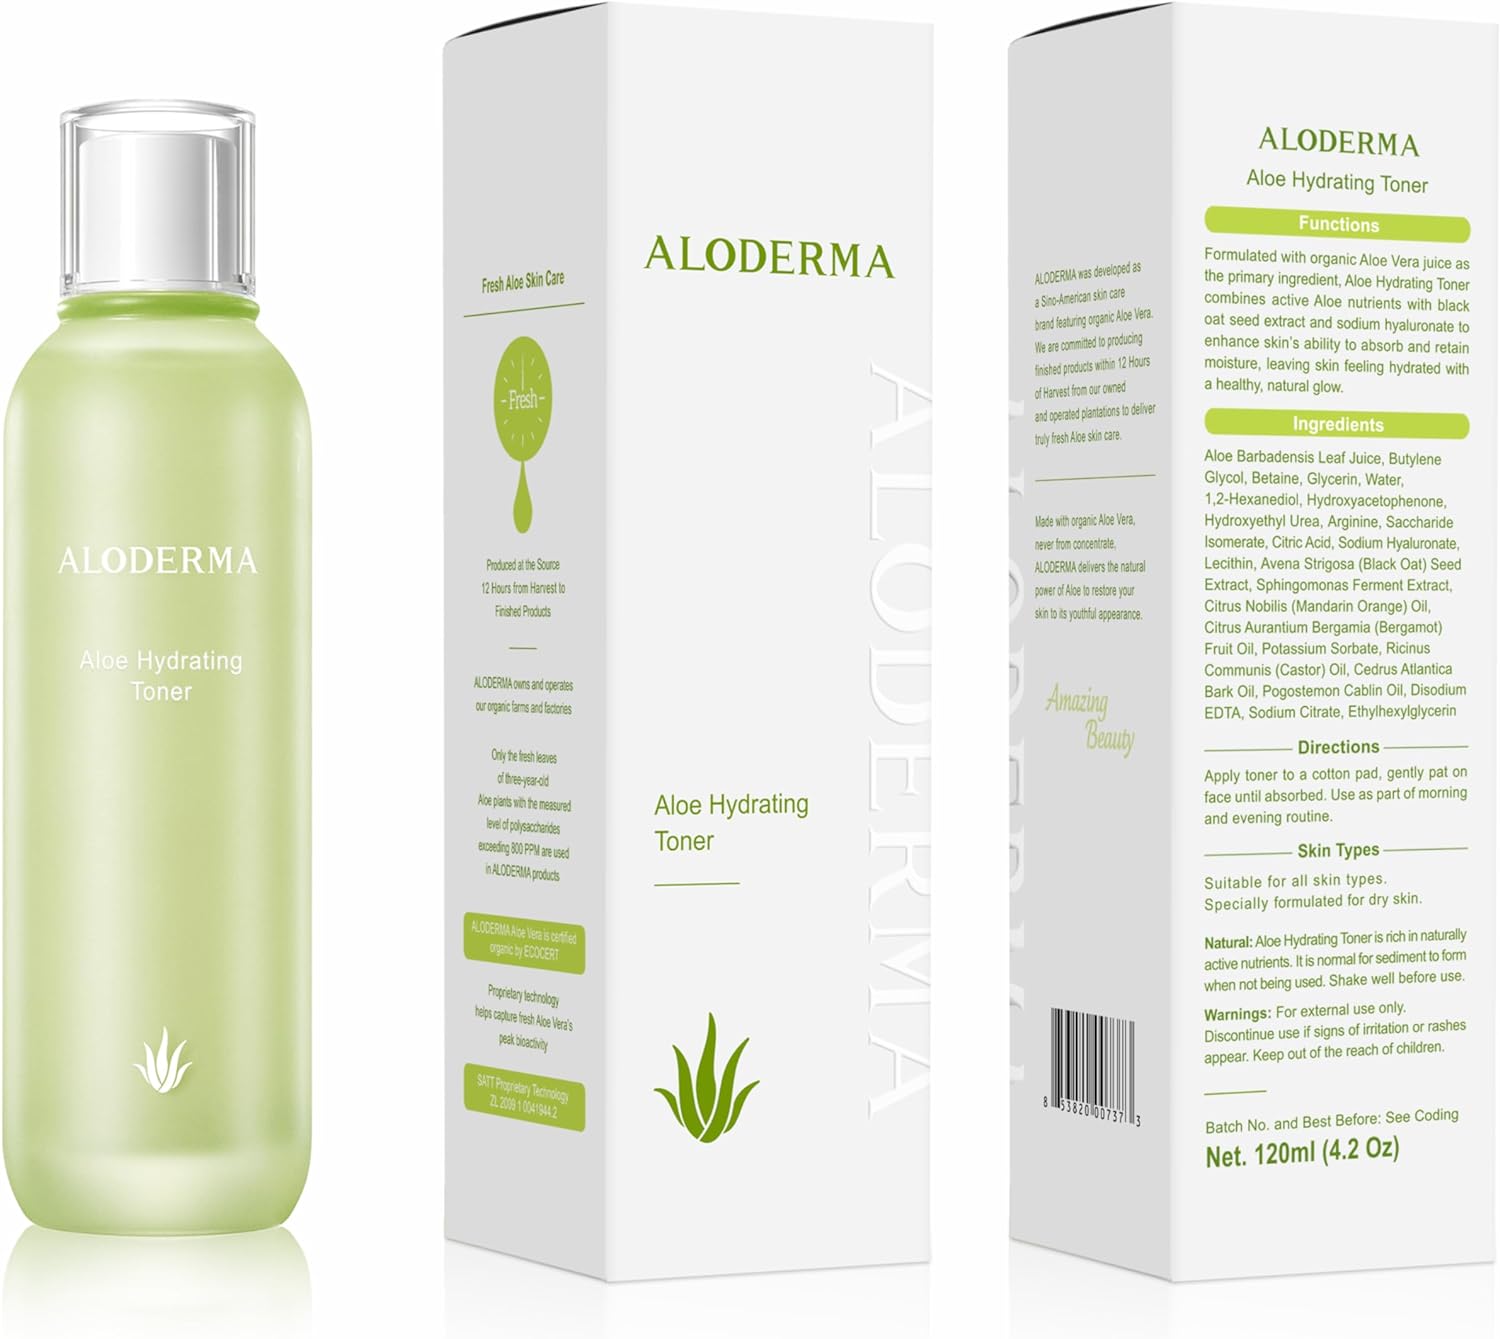 Aloderma Aloe Hydrating Facial Toner with 91% Organic Aloe Vera Juice - Natural Moisturizing Aloe Vera Toner for Face with Arginine - Aloe Vera Face Toner for Women  Men for All Skin Types, 4.2 oz